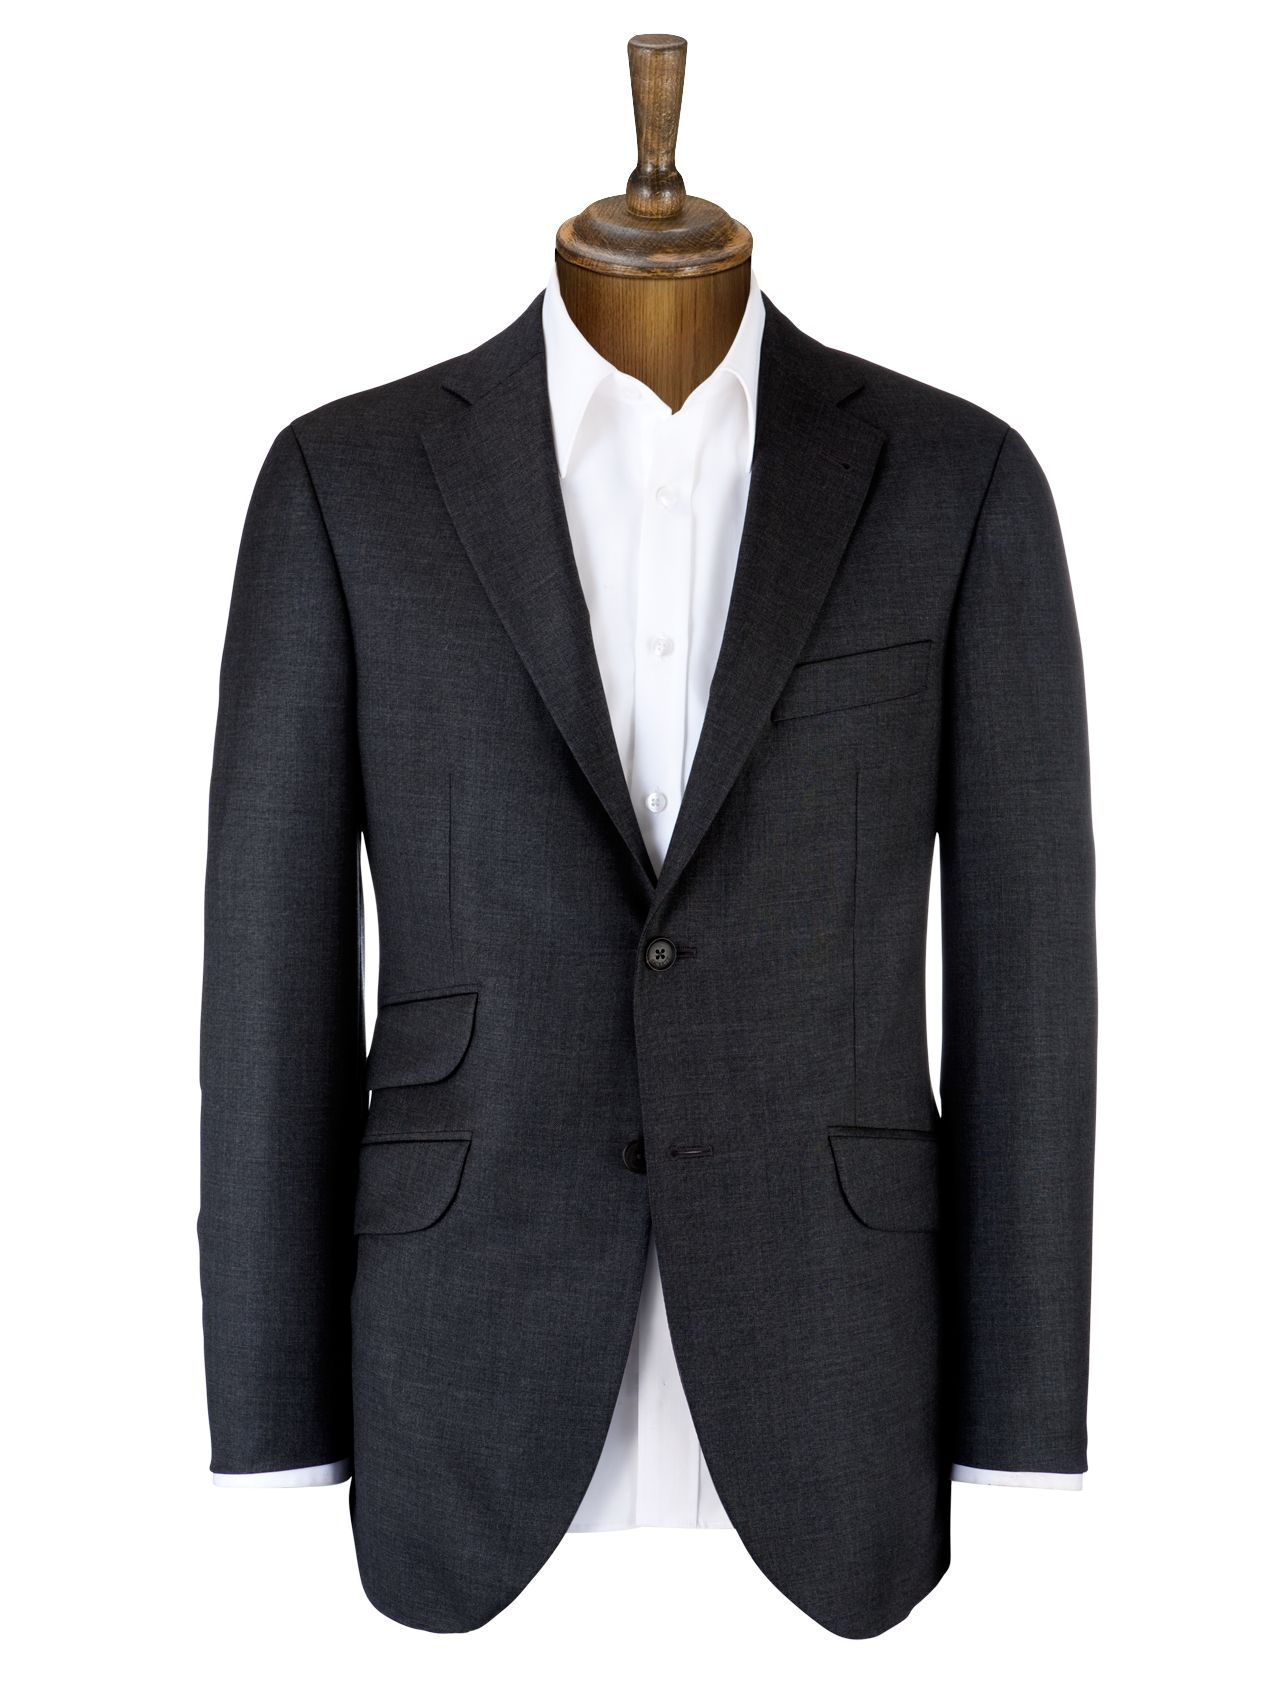 Hackett London Pure Wool Suit Jacket, Charcoal at John Lewis